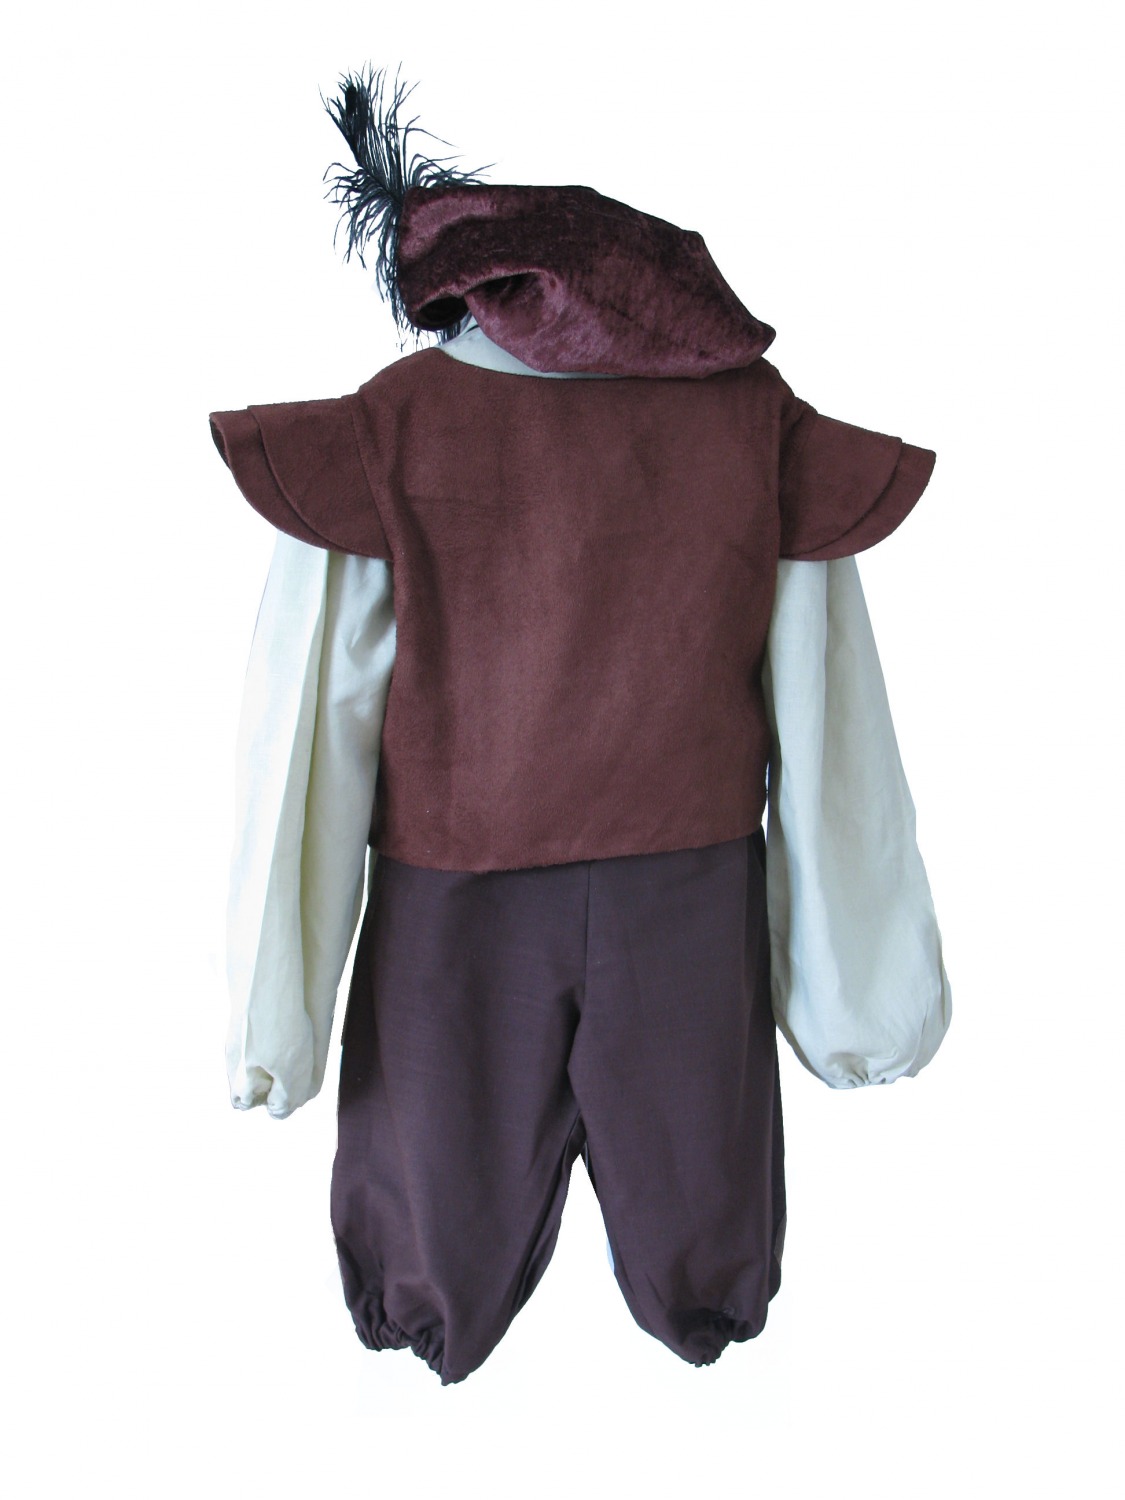 Boy's Medieval Tudor Costume Age 7 - 8 Image